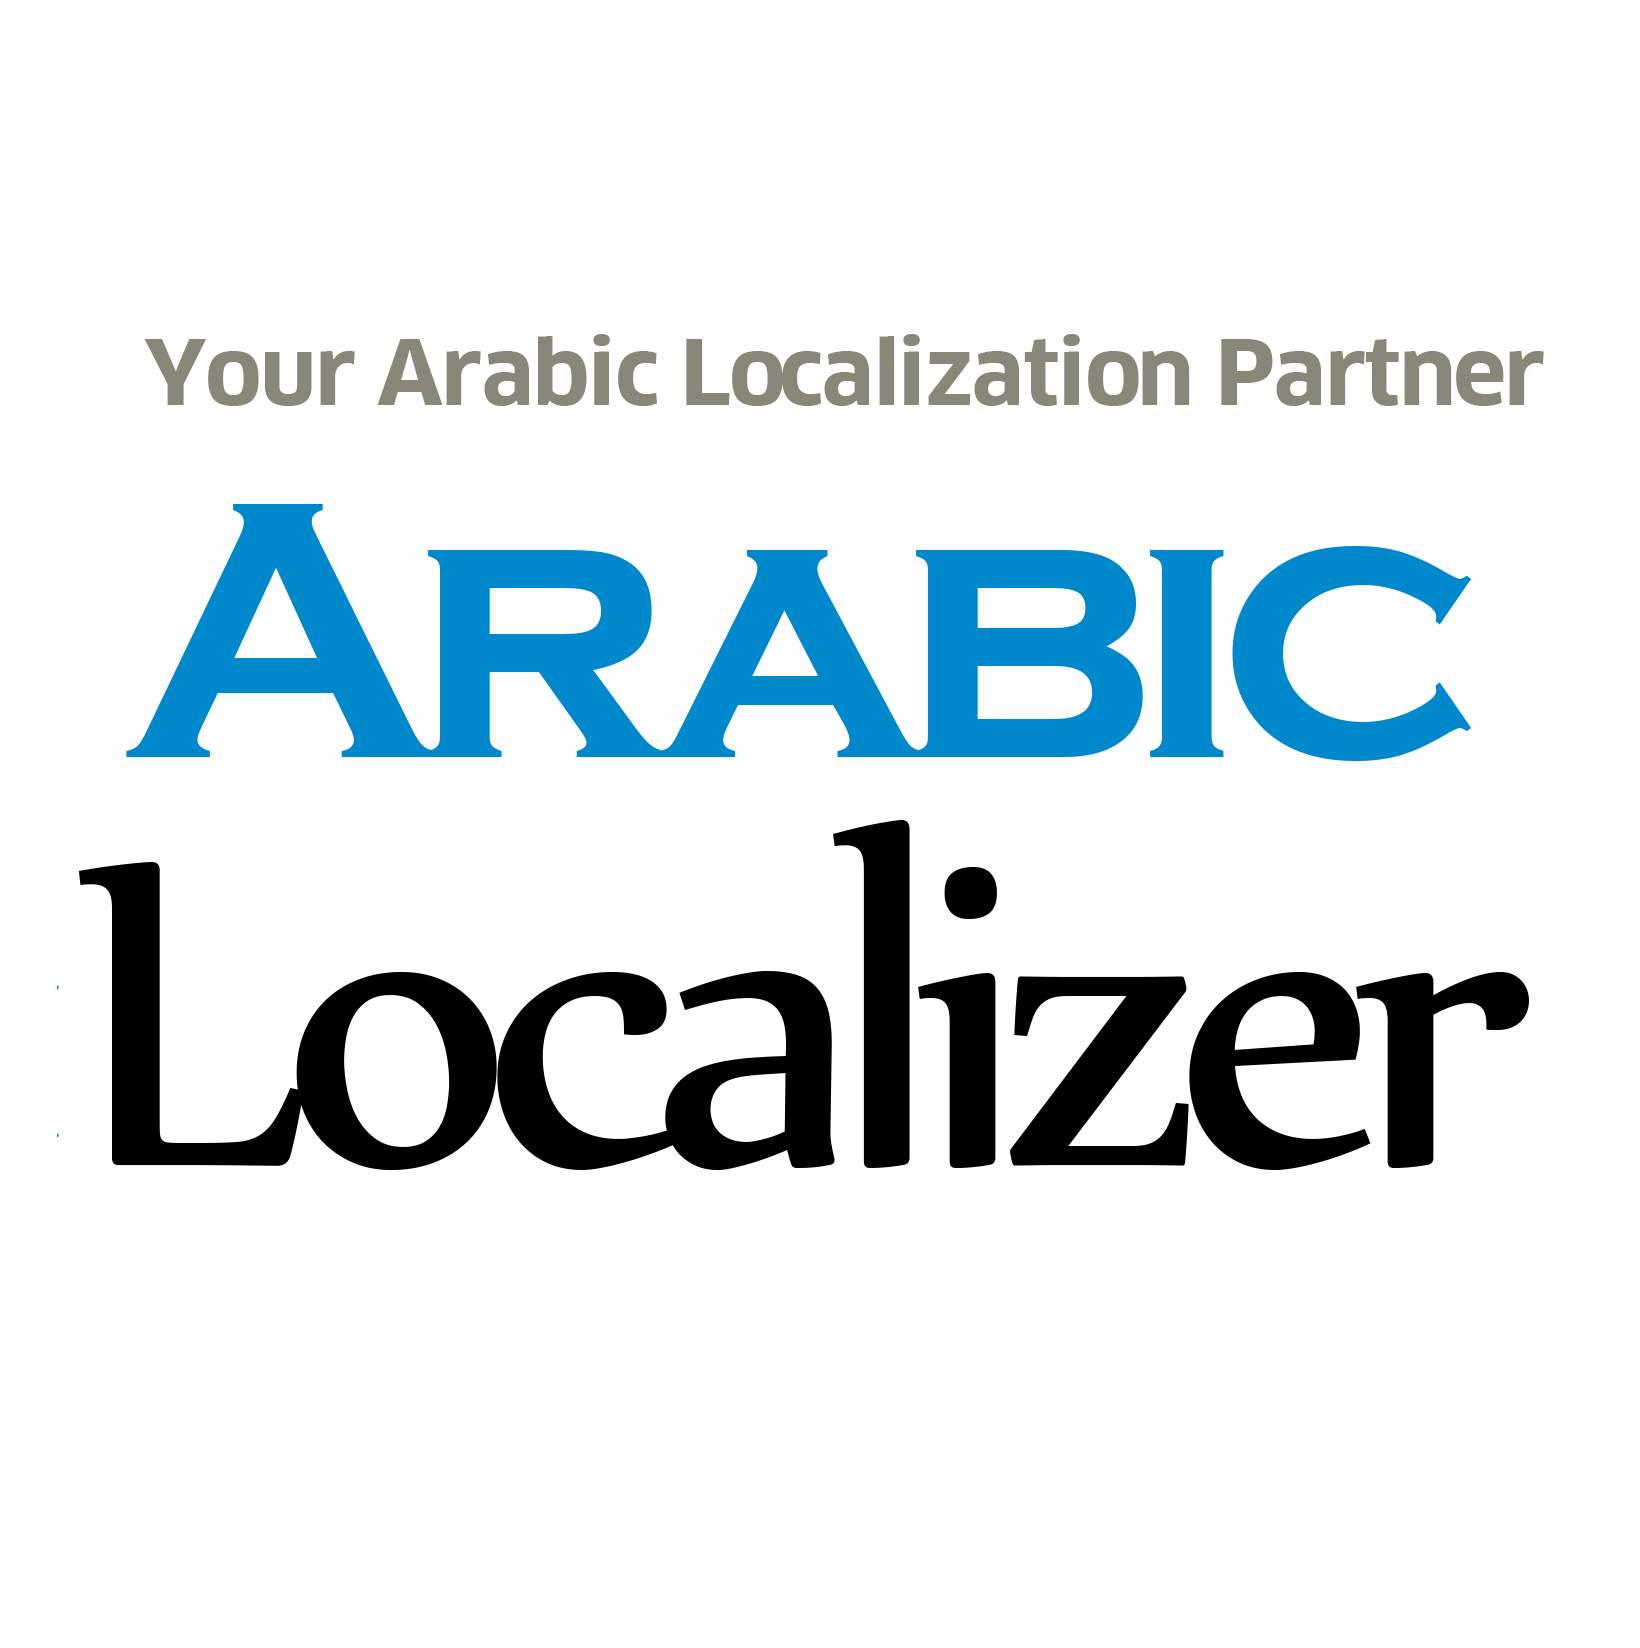 Arabic localizer